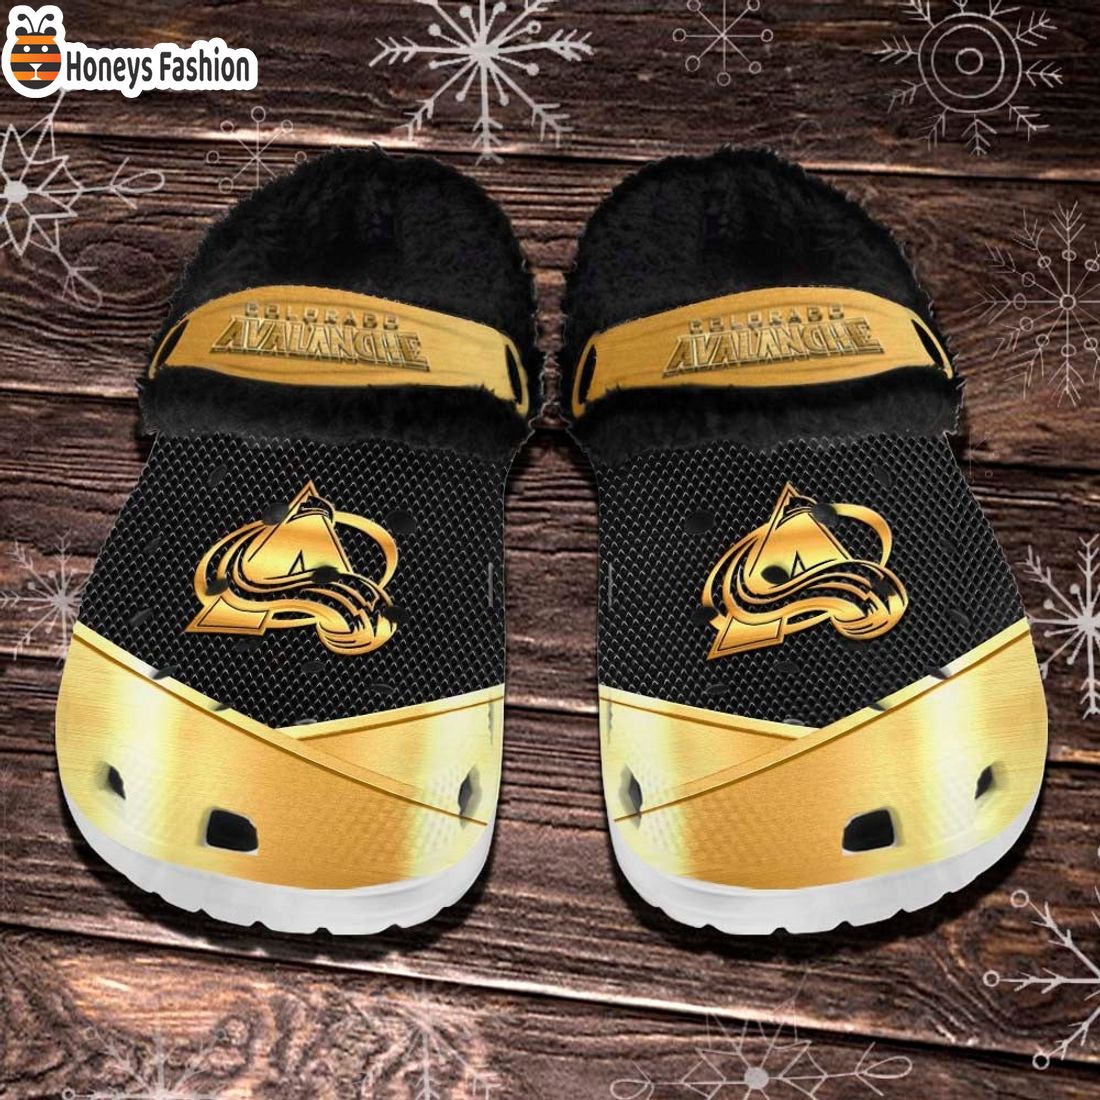 Colorado Avalanche NHL Fleece Crocs Clogs Shoes